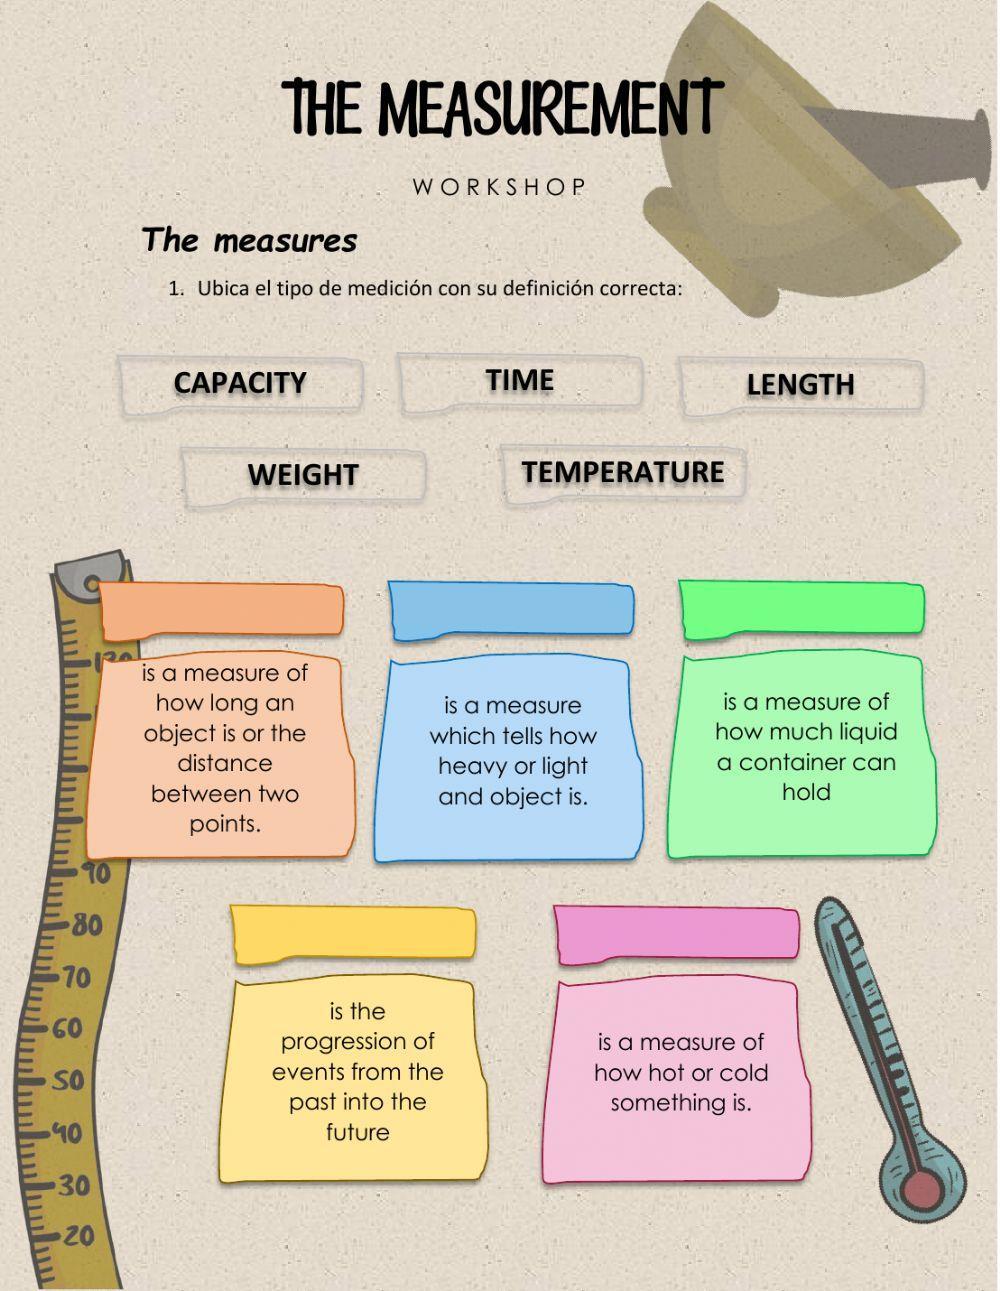 The measurement workshop